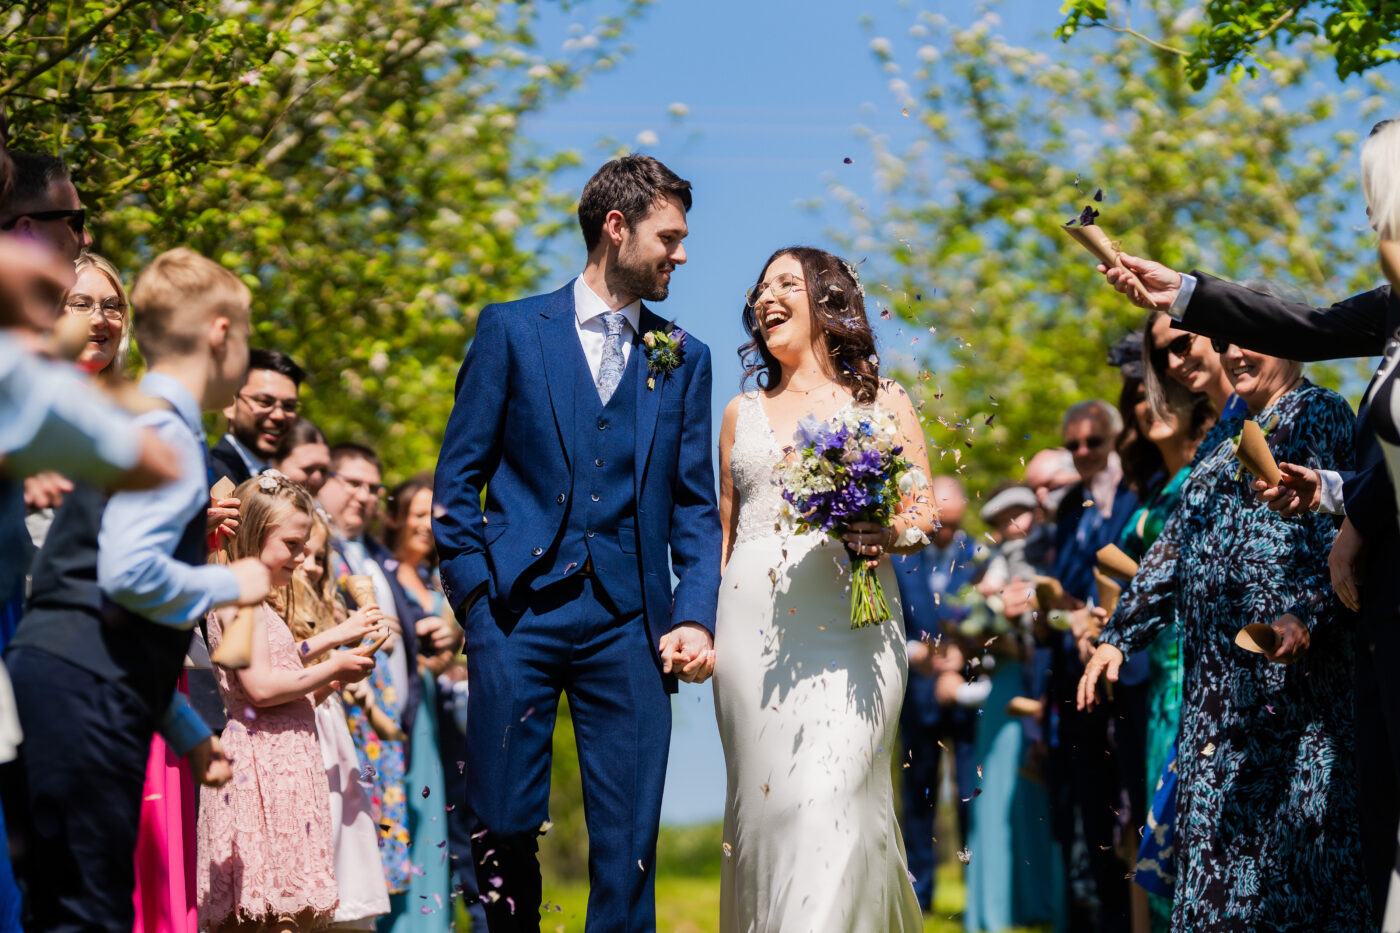 outdoor wedding venue, tipi wedding, wedding venues herefordshire uk, the orchard wedding venue, countryside wedding